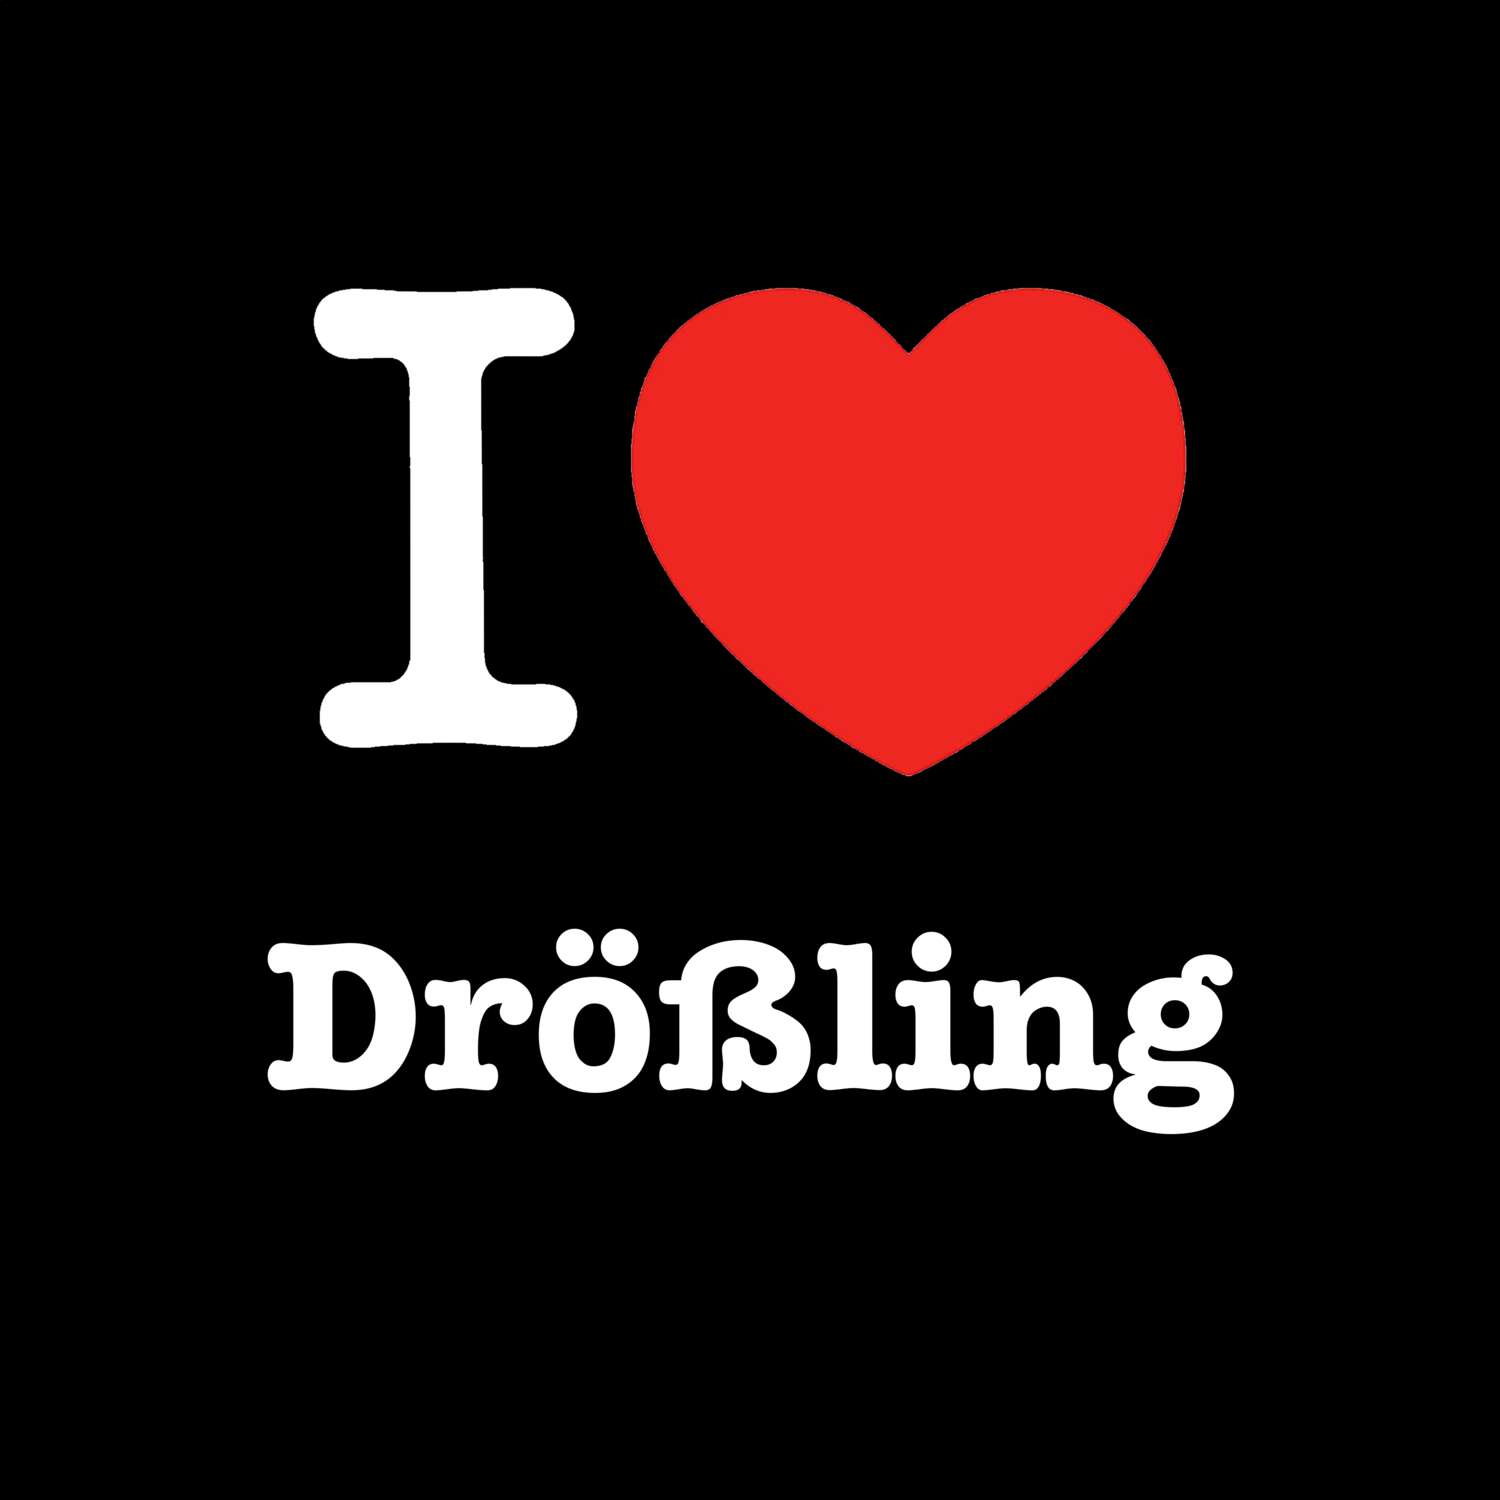 Drößling T-Shirt »I love«